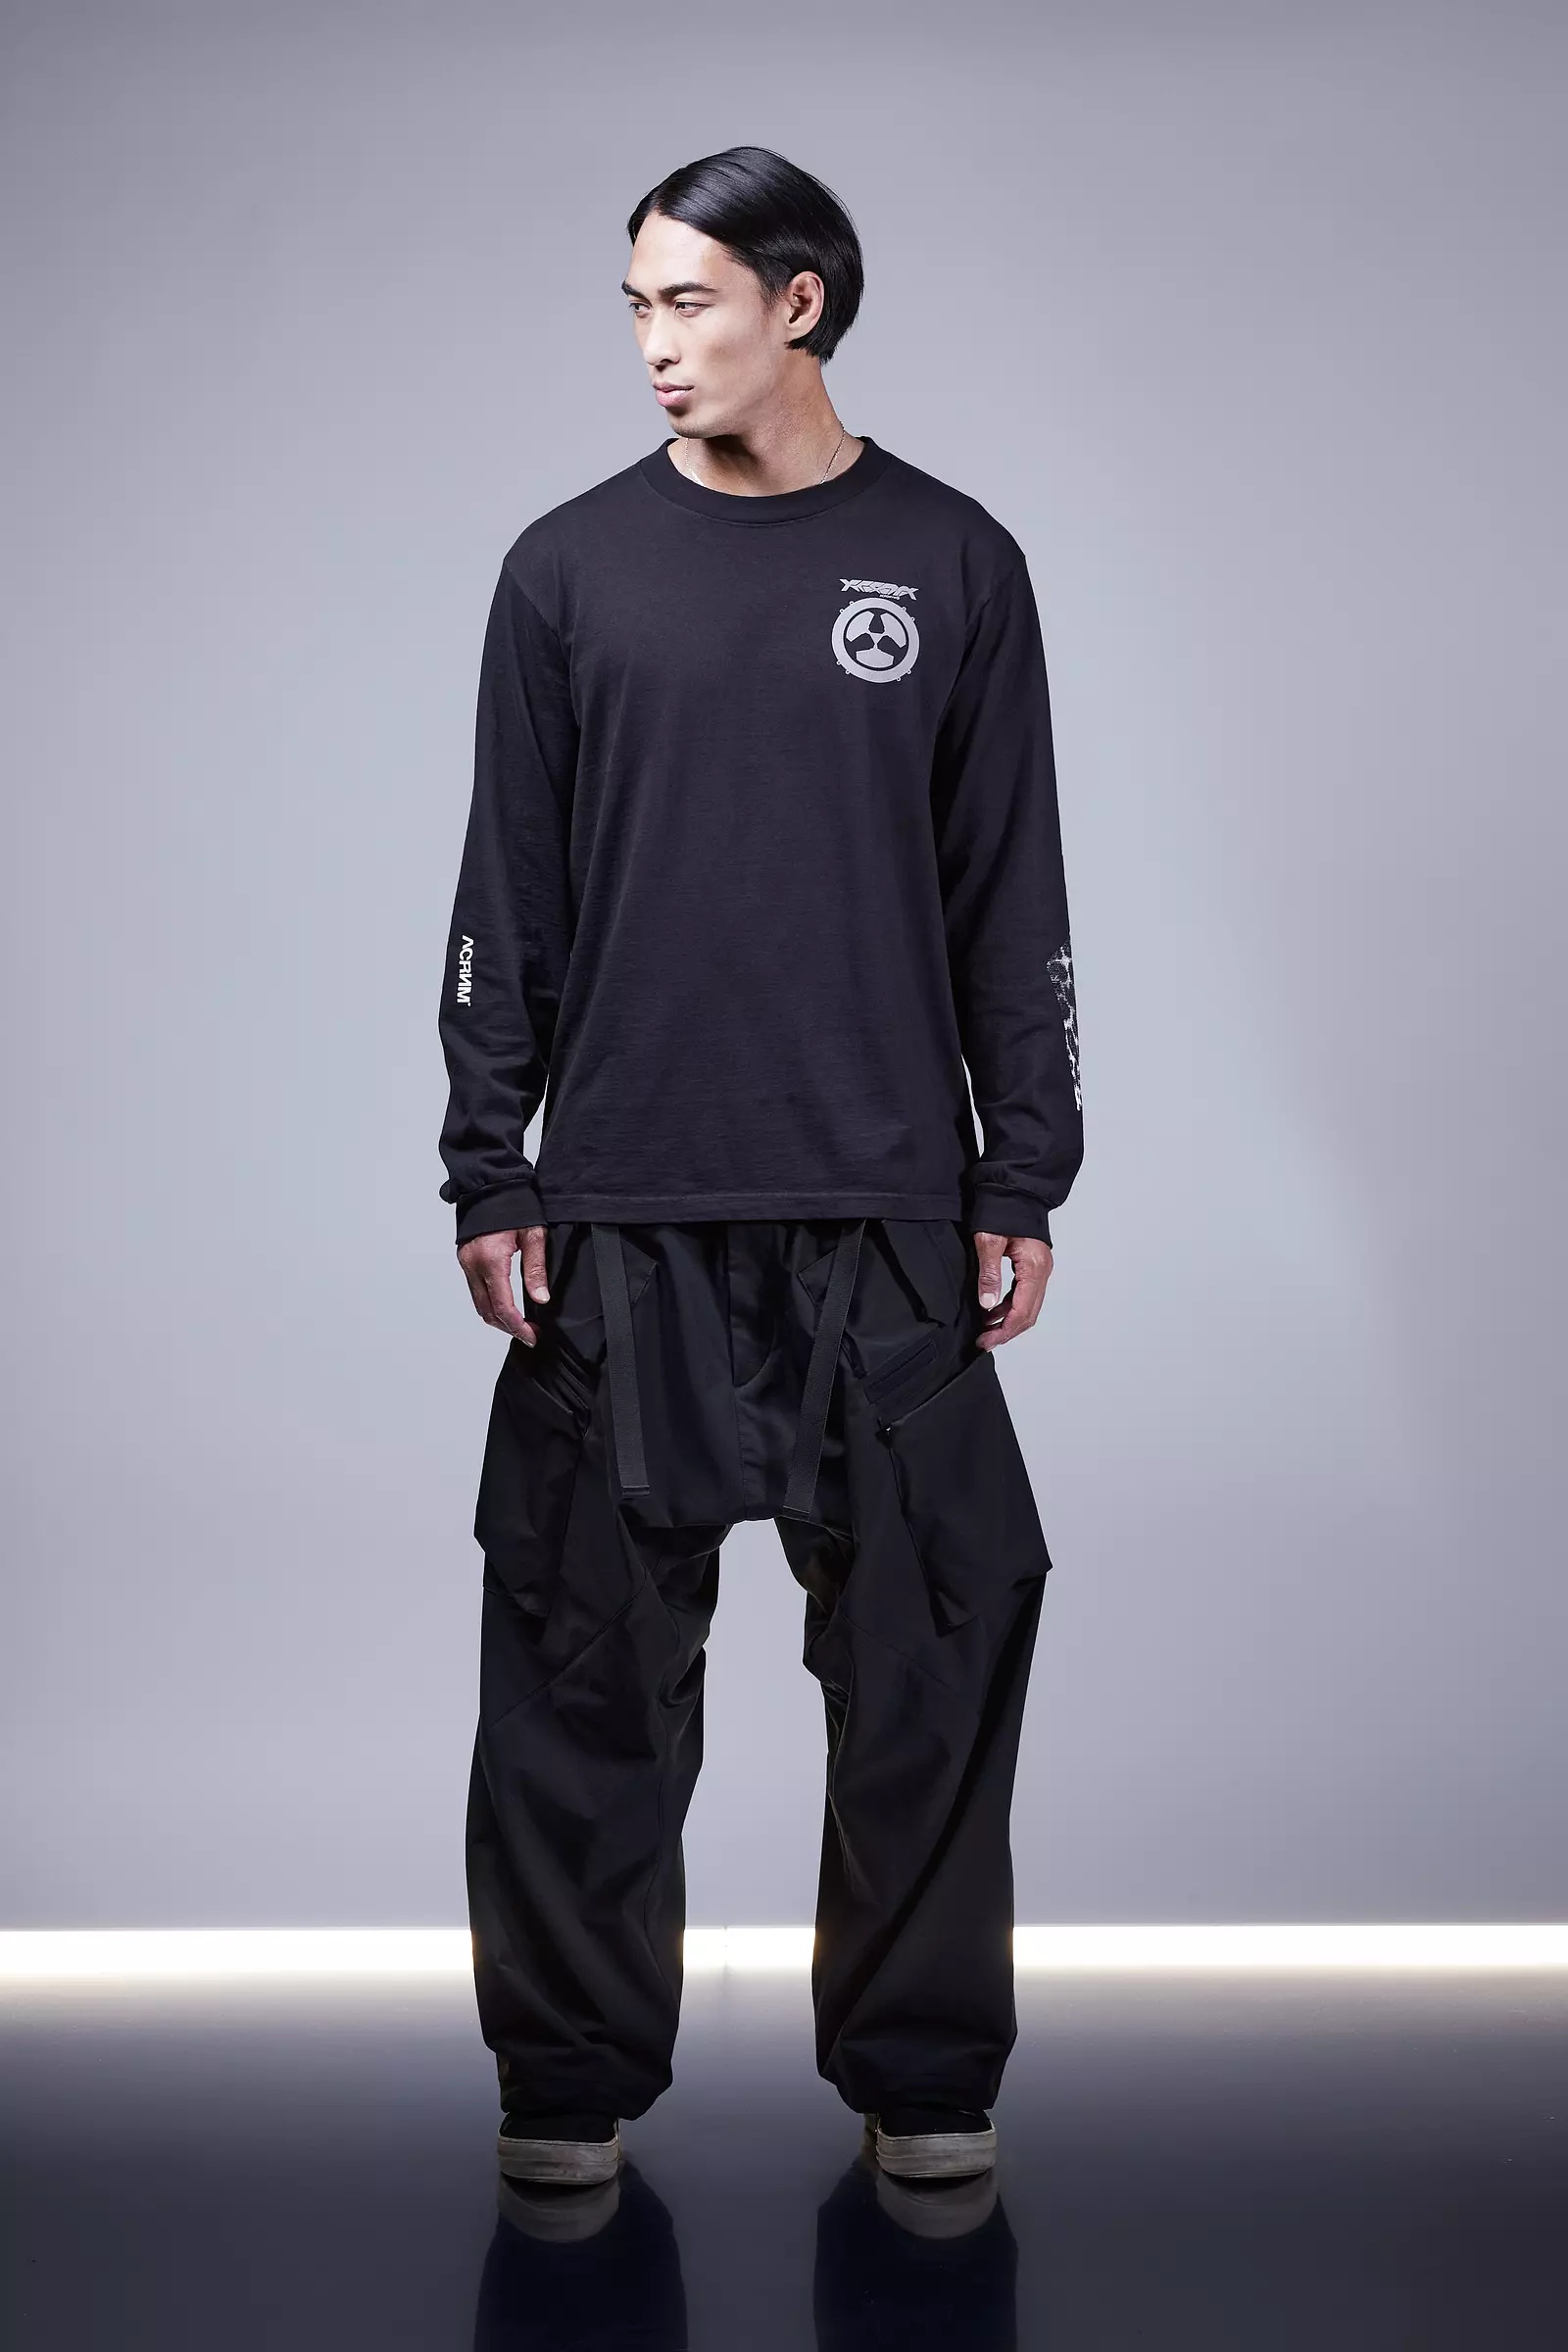 S39-RS Cotton Long Sleeve T-shirt Black - 1